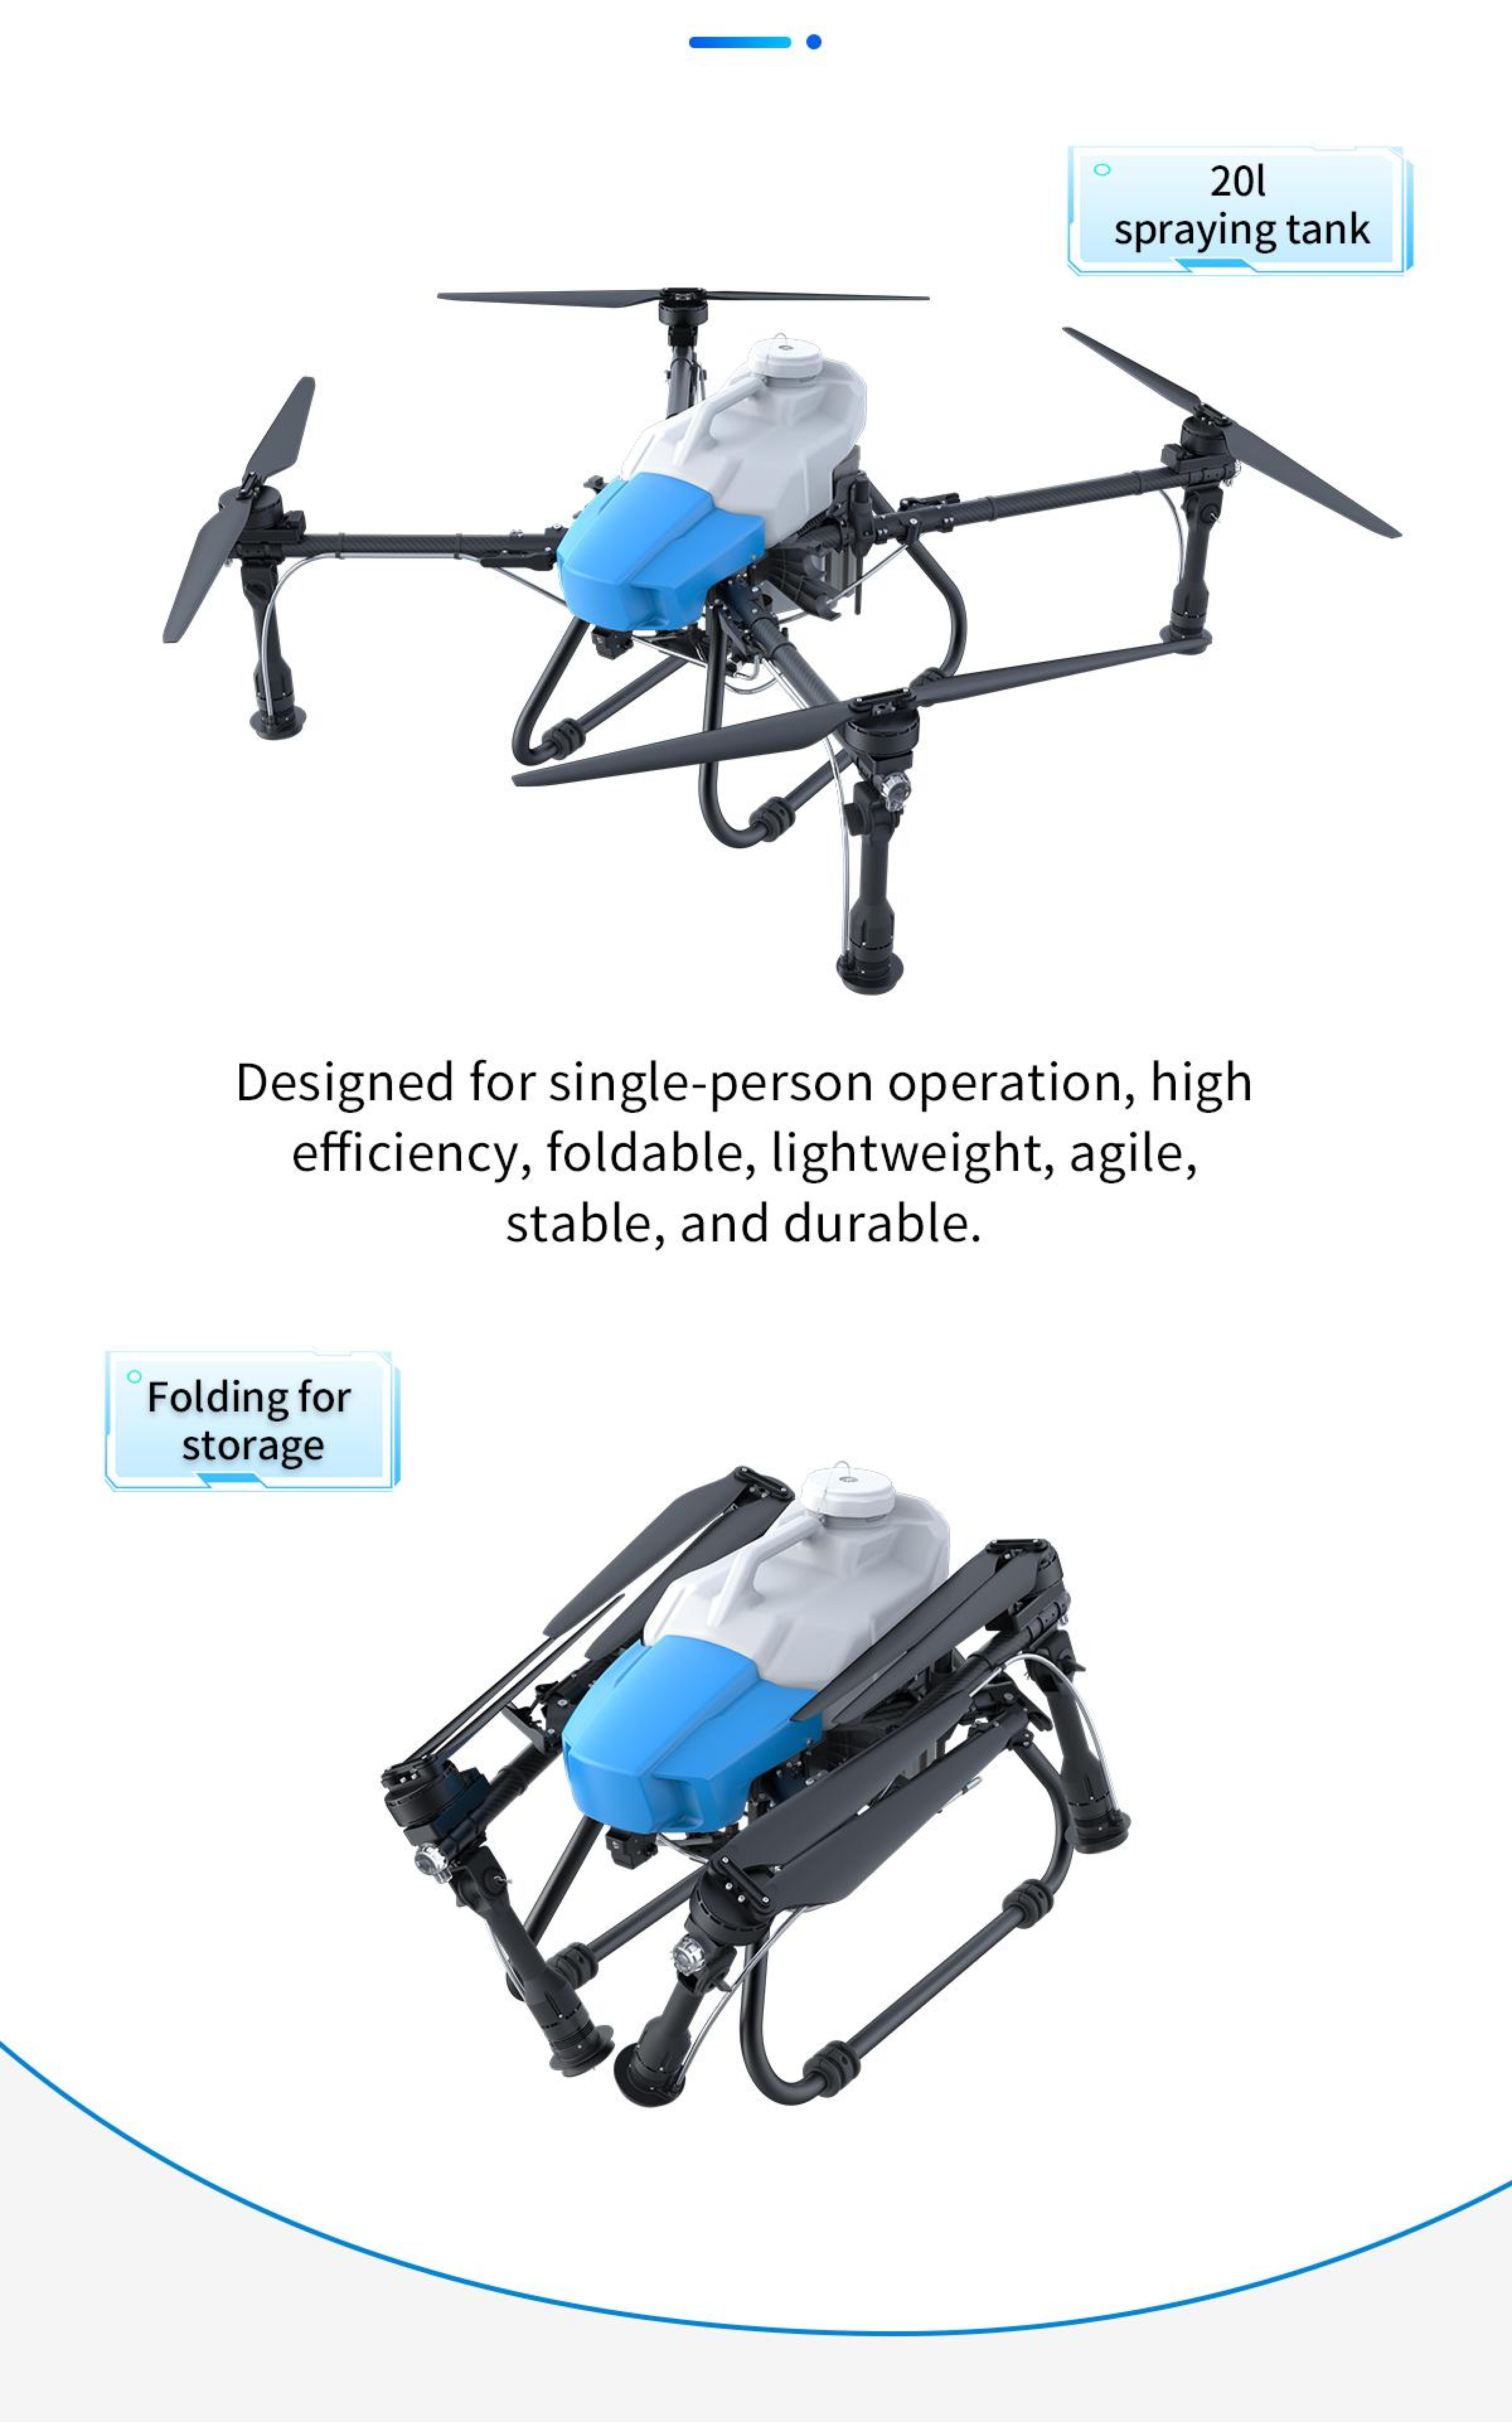 Detalles del dron agrícola A22P 01